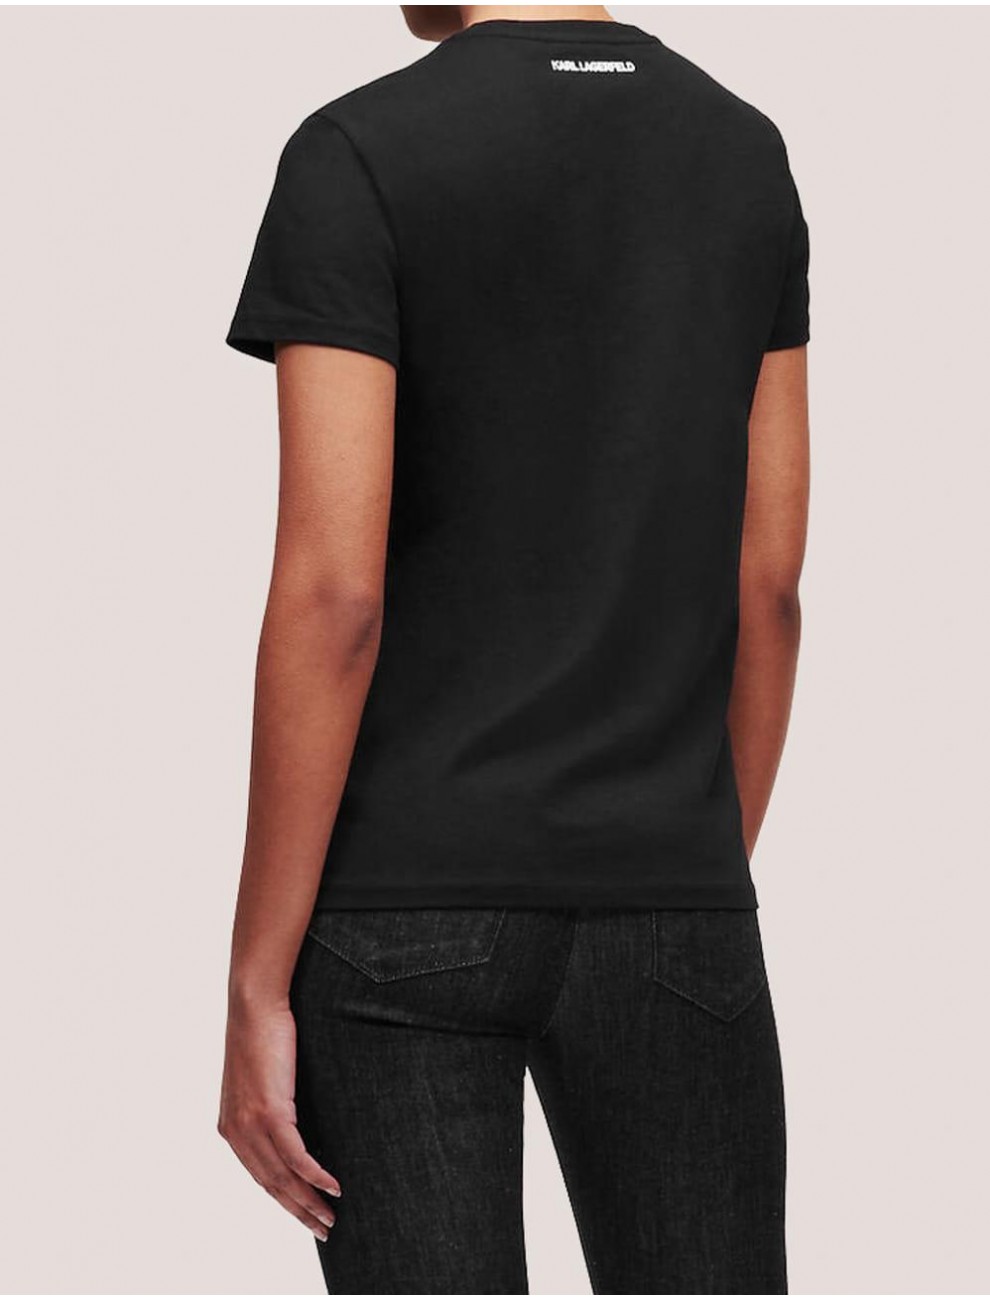 Camisas Karl Lagerfeld Tienda - Ikonik 2.0 Denim Hombre Negros